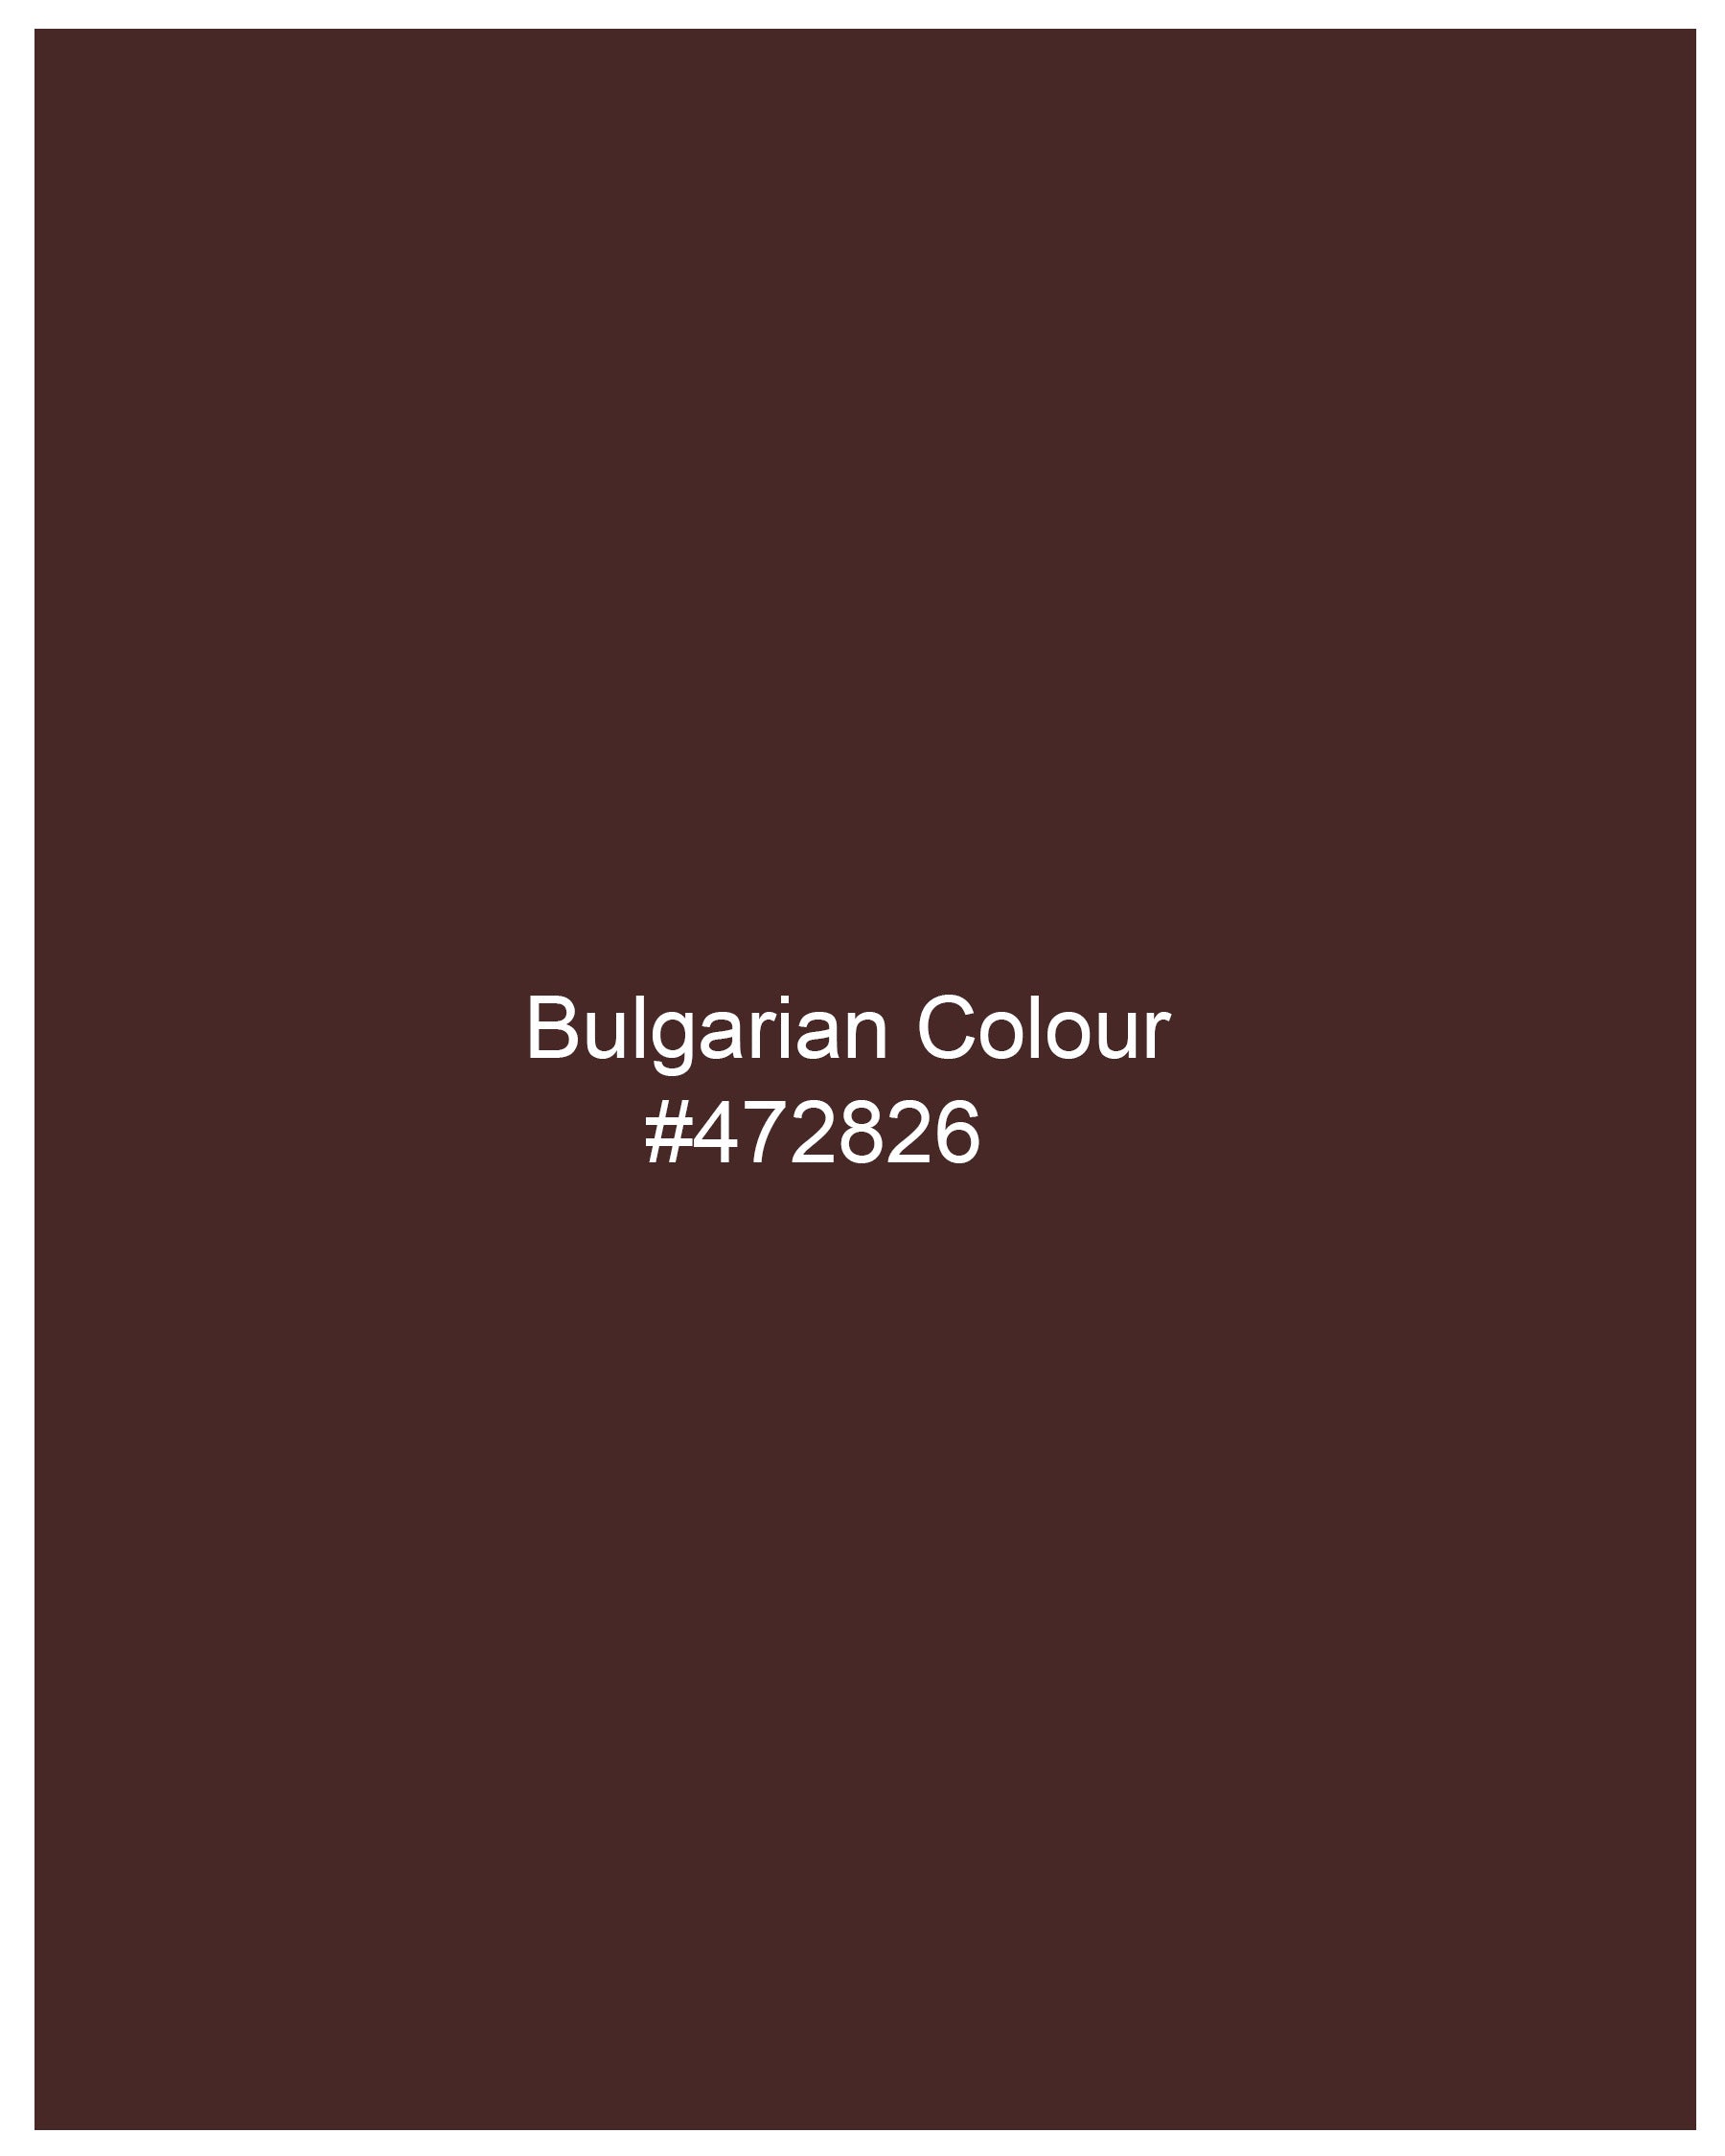 Bulgarian Brown Luxurious Linen Shirt 8170-38, 8170-H-38, 8170-39, 8170-H-39, 8170-40, 8170-H-40, 8170-42, 8170-H-42, 8170-44, 8170-H-44, 8170-46, 8170-H-46, 8170-48, 8170-H-48, 8170-50, 8170-H-50, 8170-52, 8170-H-52